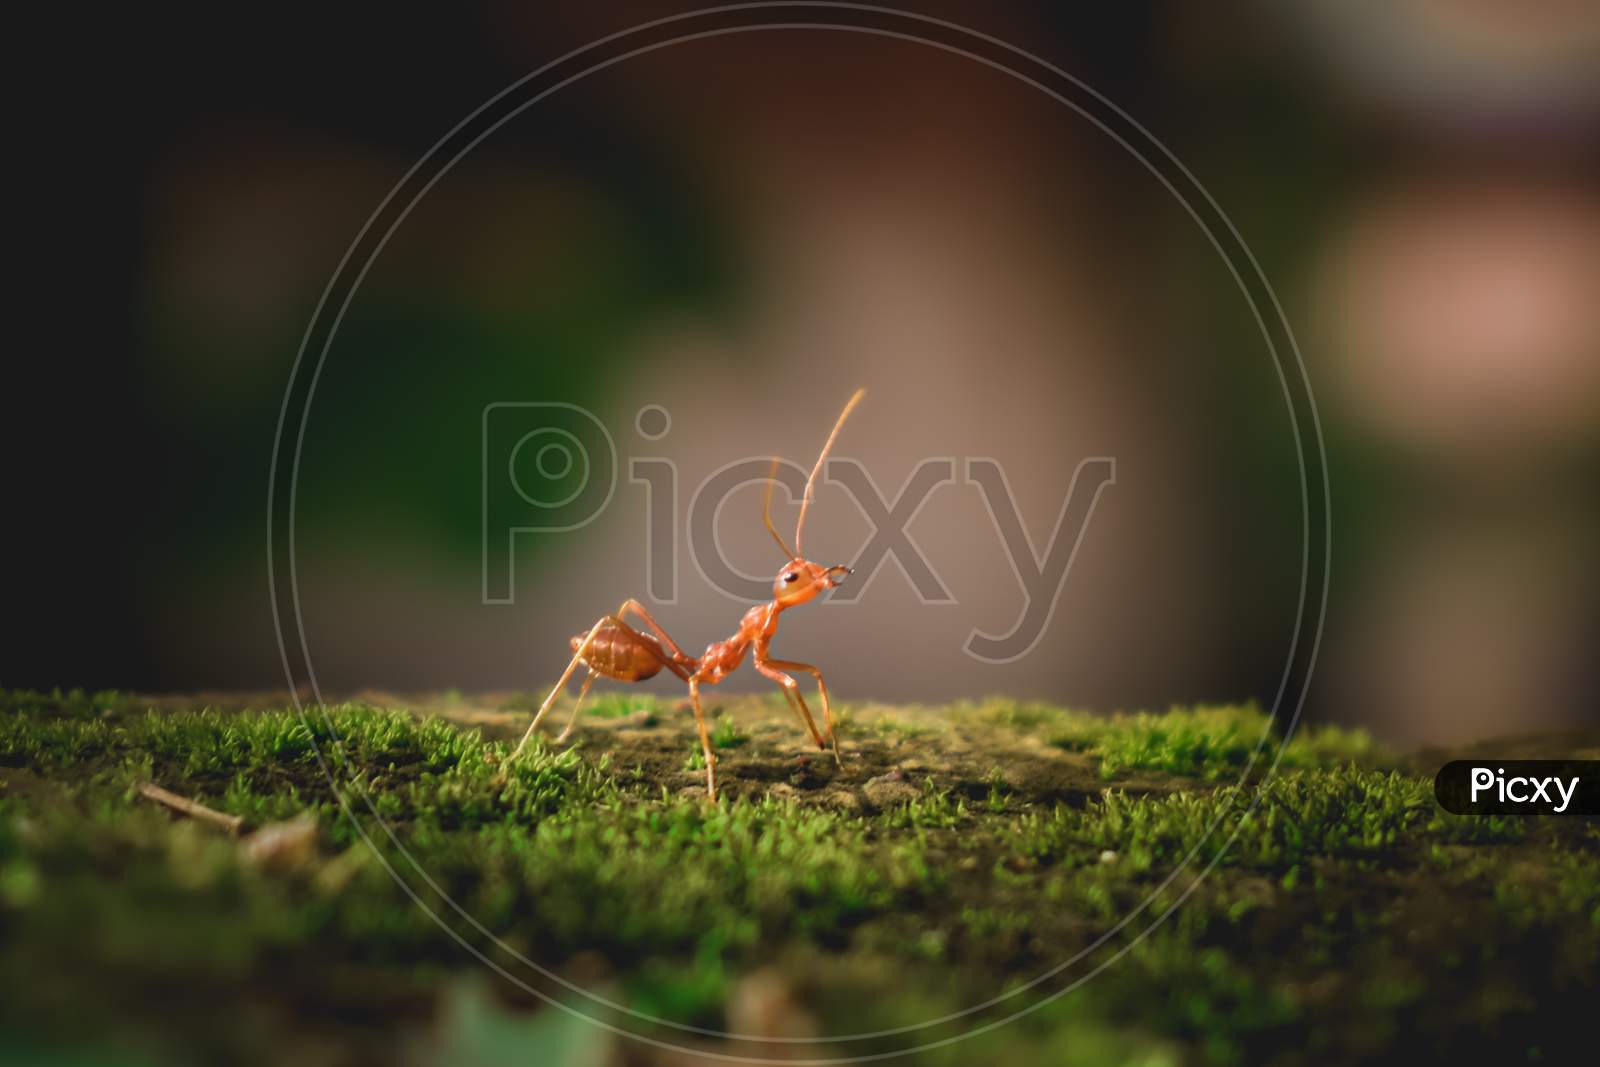 Ant micro shots